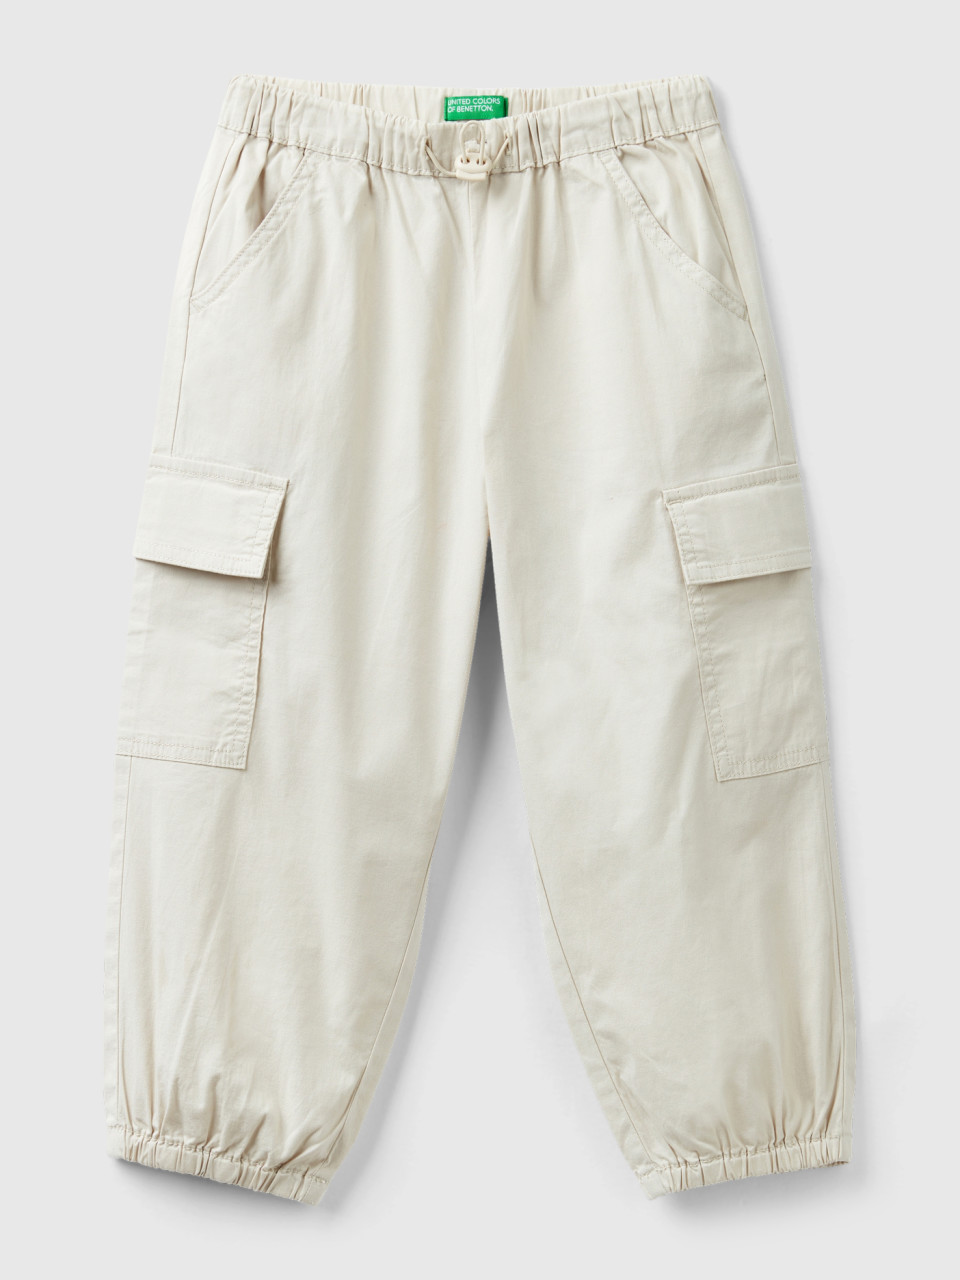 Benetton, Stretch Cotton Cargo Trousers, Creamy White, Kids